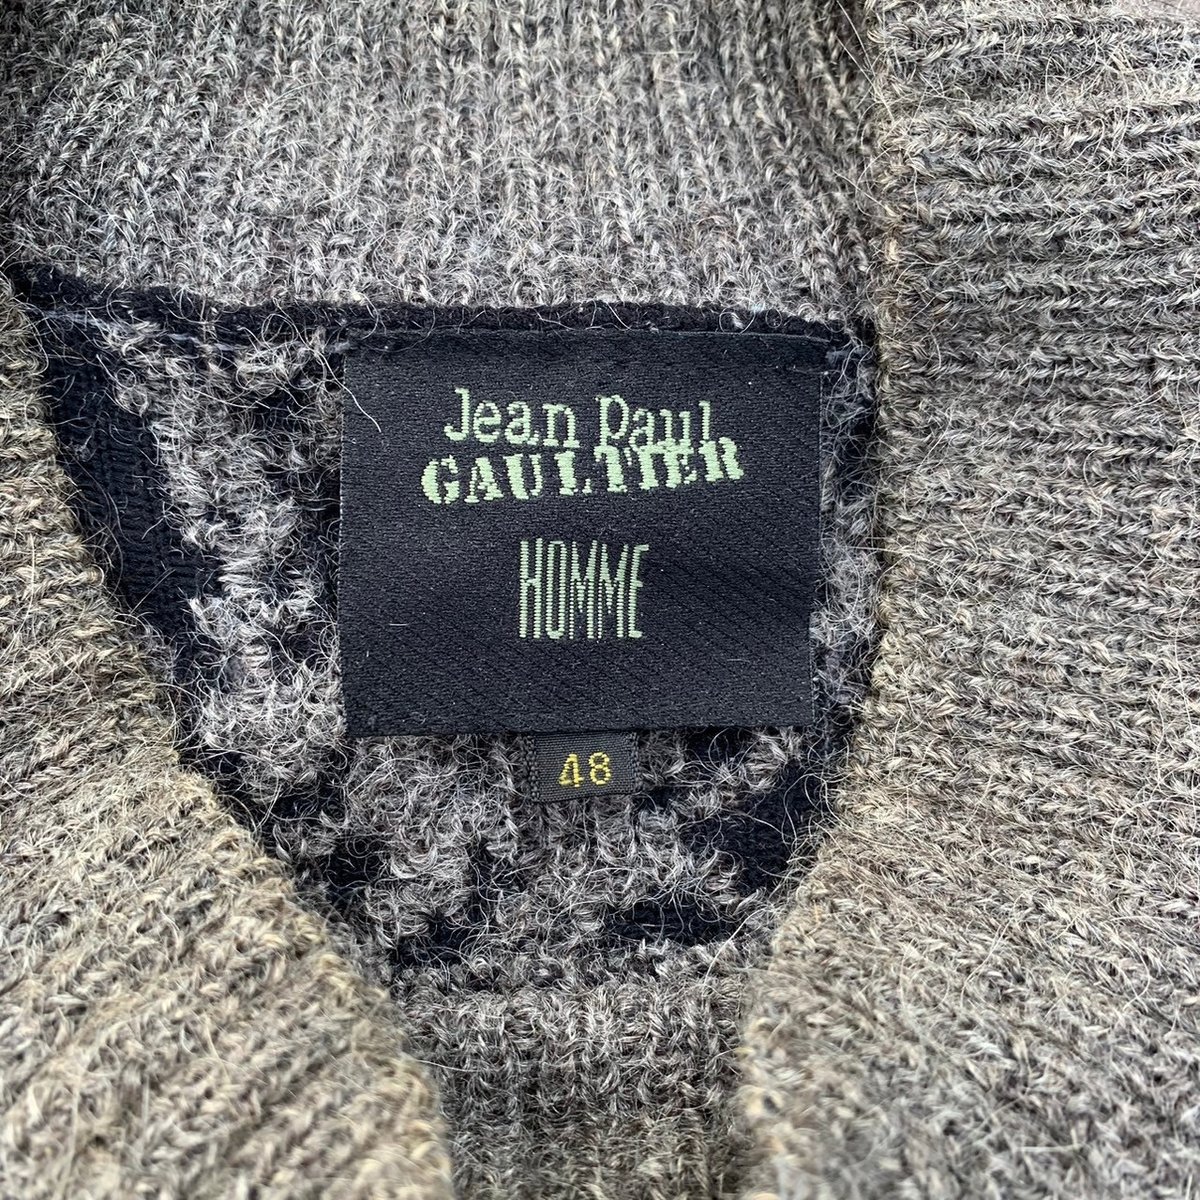 jean paul gaultier homme various patterns knit